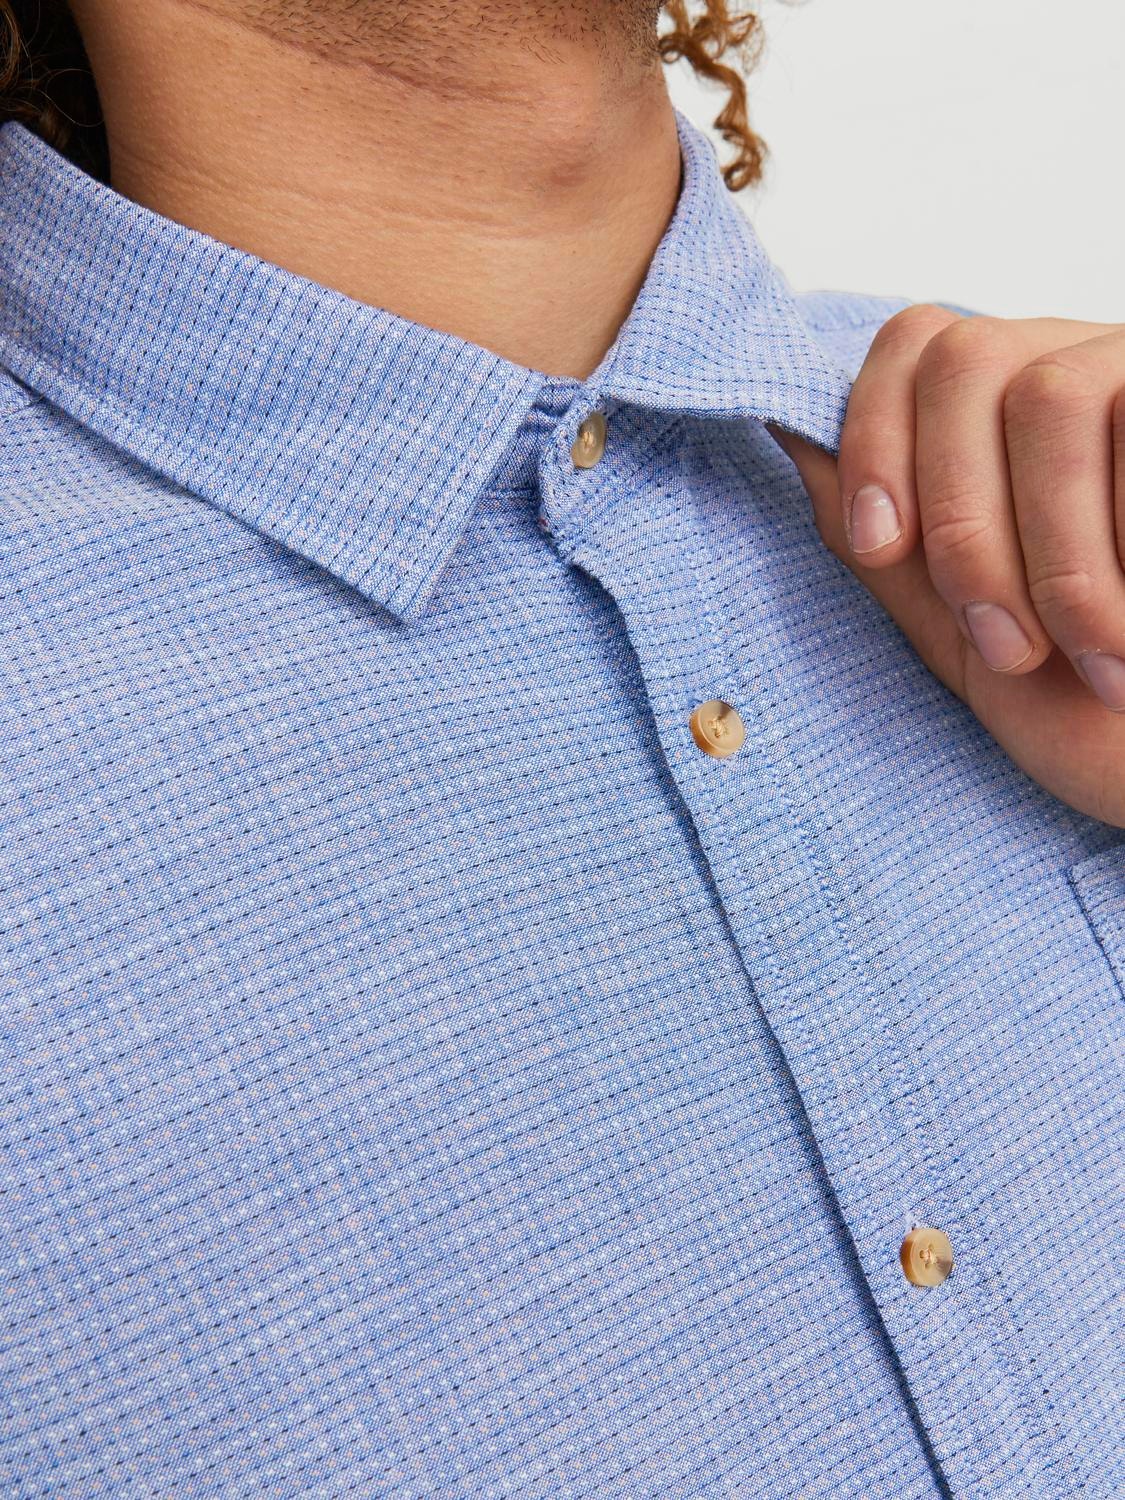 Jack & Jones Plus Size Regular Fit Casual skjorte -Ensign Blue - 12235368